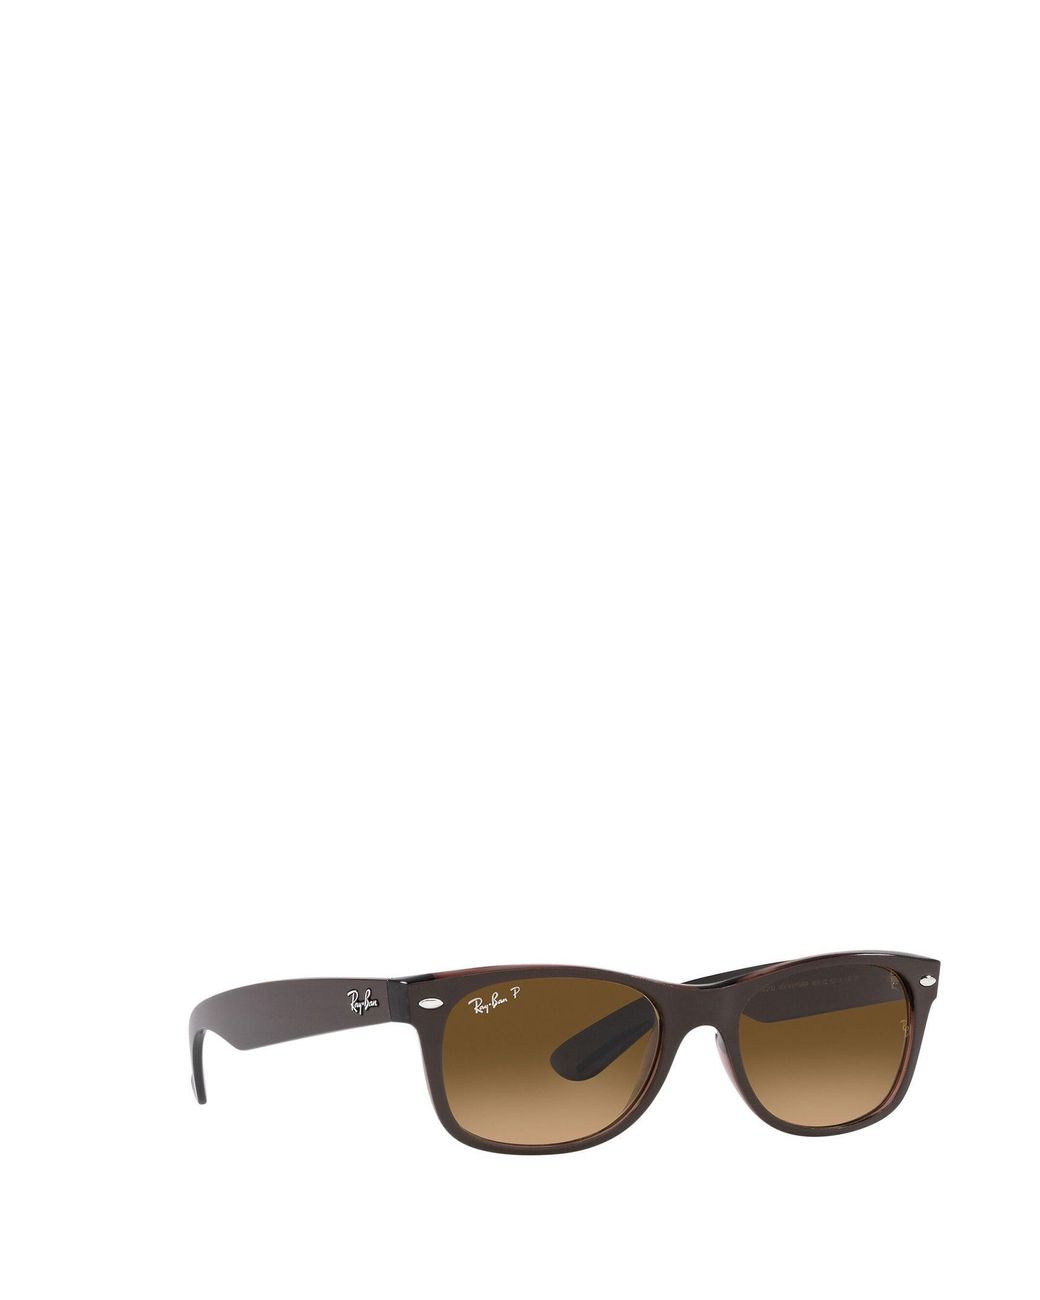 Ray-Ban 16mm Aviator Sunglasses in Dark Brown Brown Womens Sunglasses Ray-Ban Sunglasses 